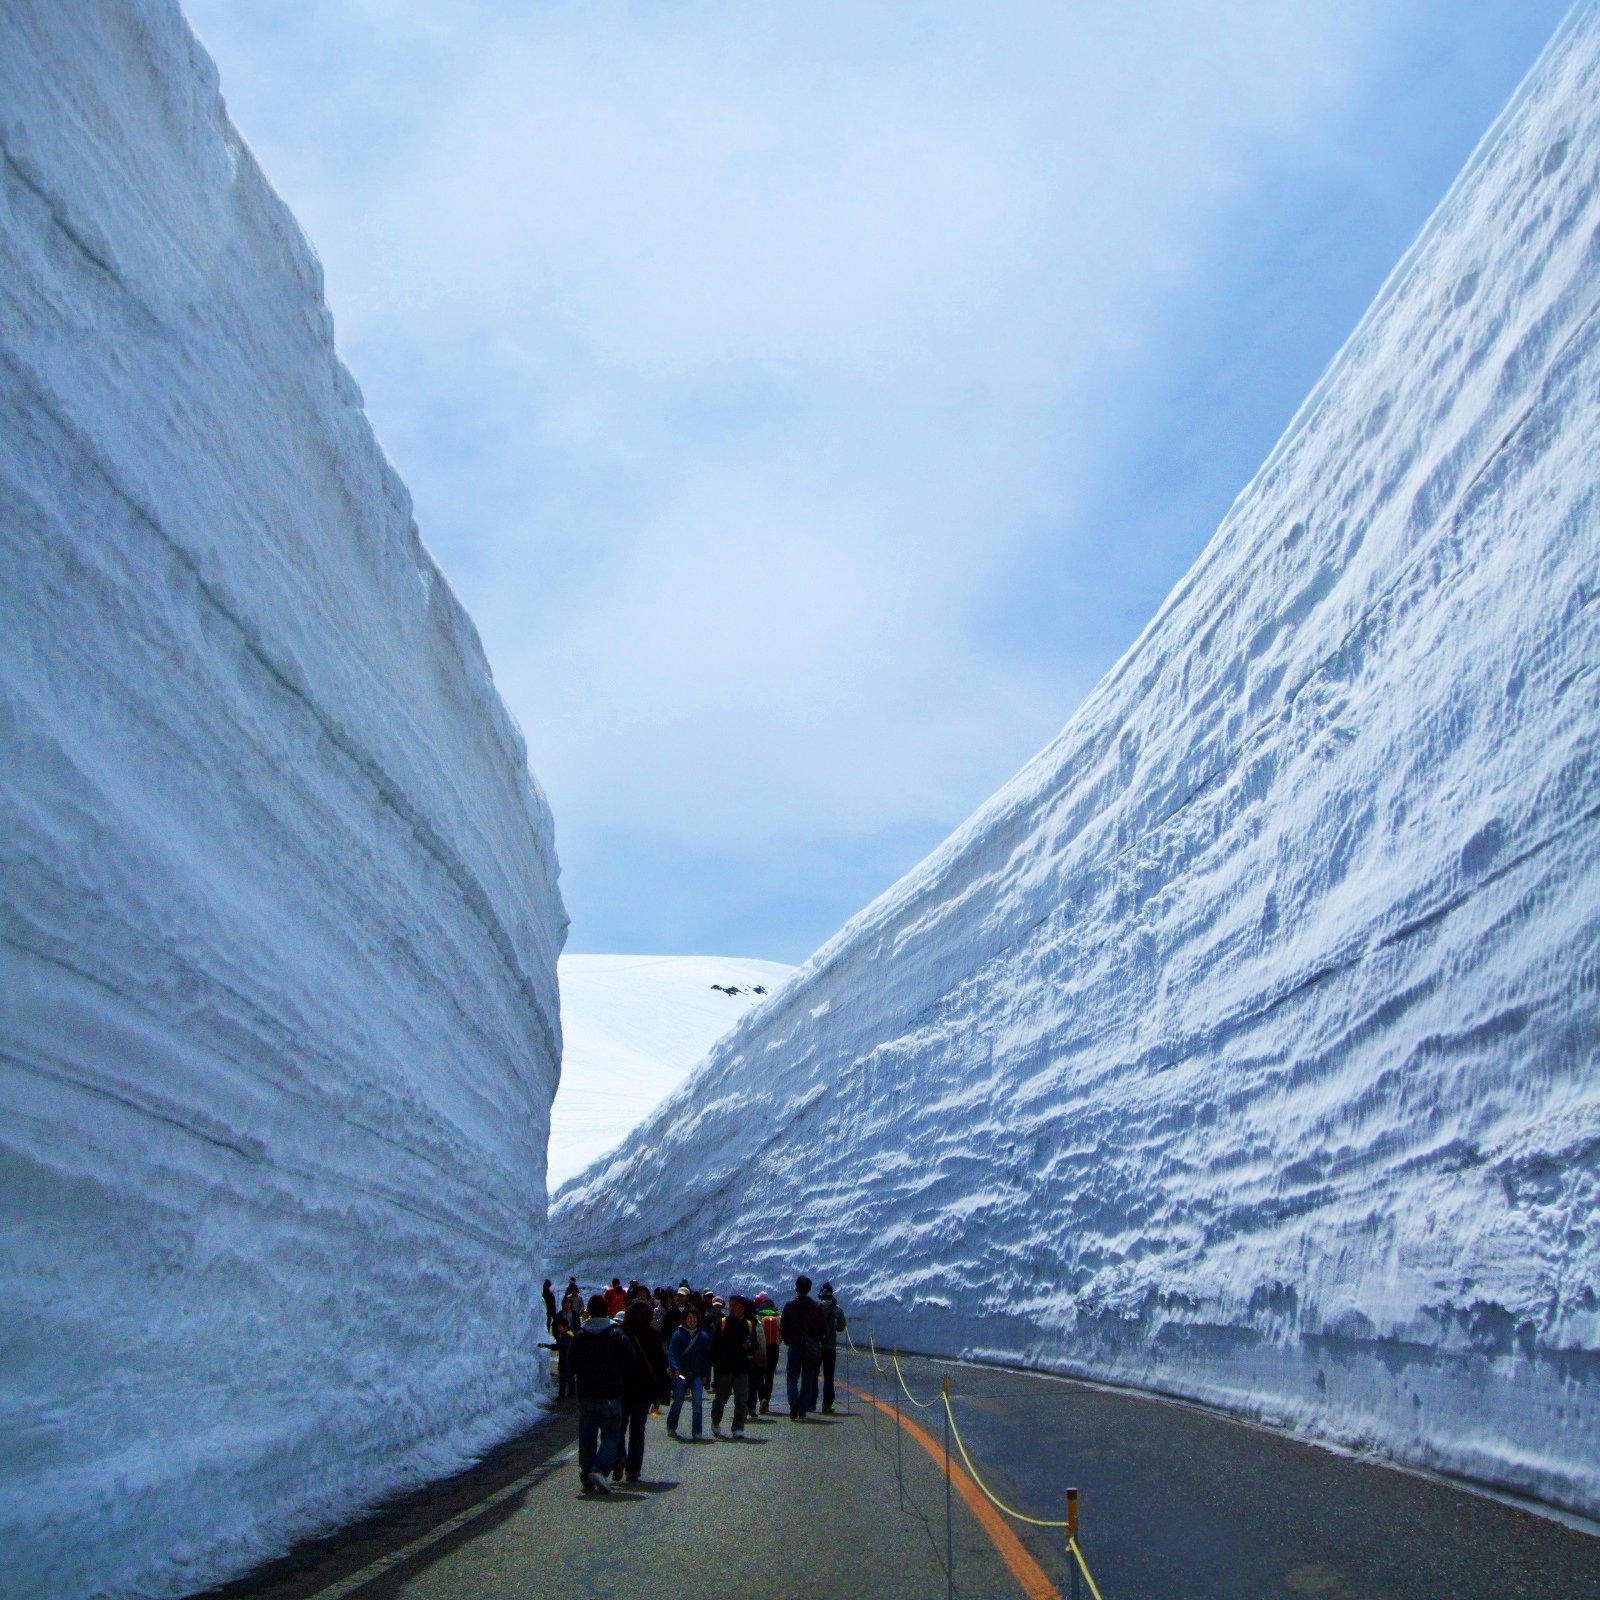 Самые большие сугробы. Татэяма Куробэ. Снежный коридор Татэяма Куробэ в Японии. Альпийский маршрут Татэяма Куробэ. Tateyama Kurobe Alpine.